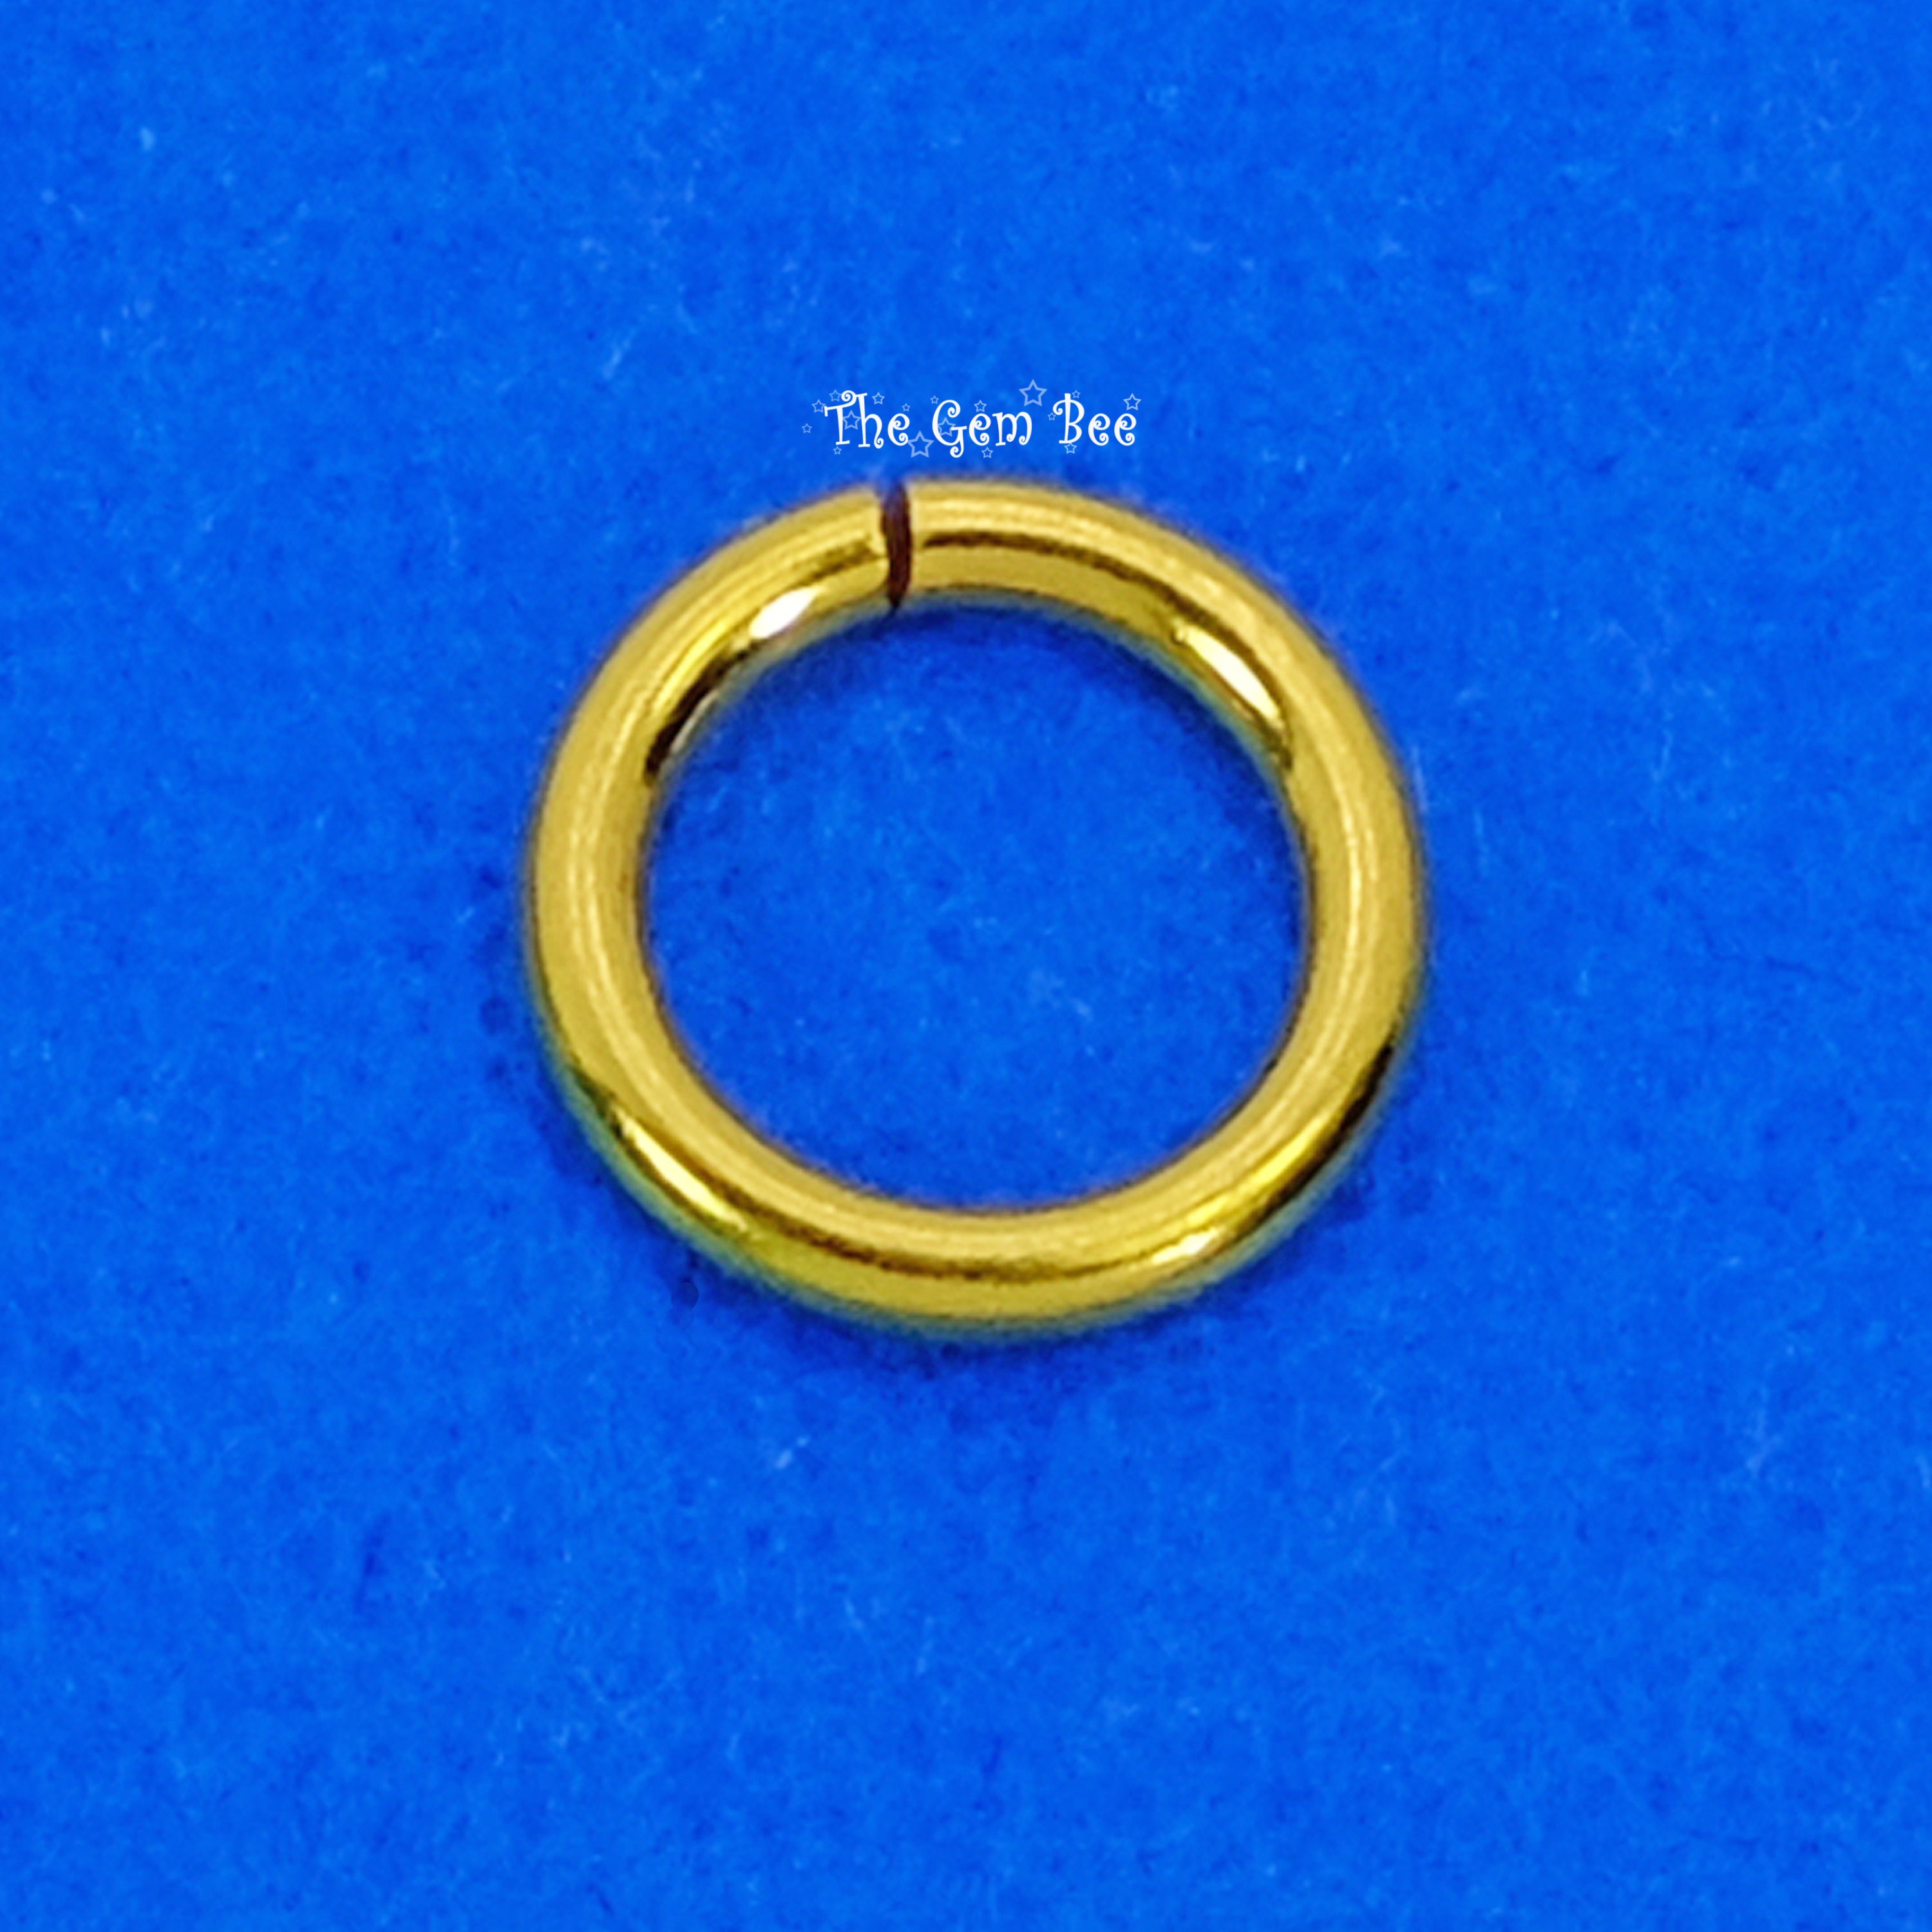 4mm 10 Piece 14k Gold Filled Jumplock Jump Ring Jewelry Making